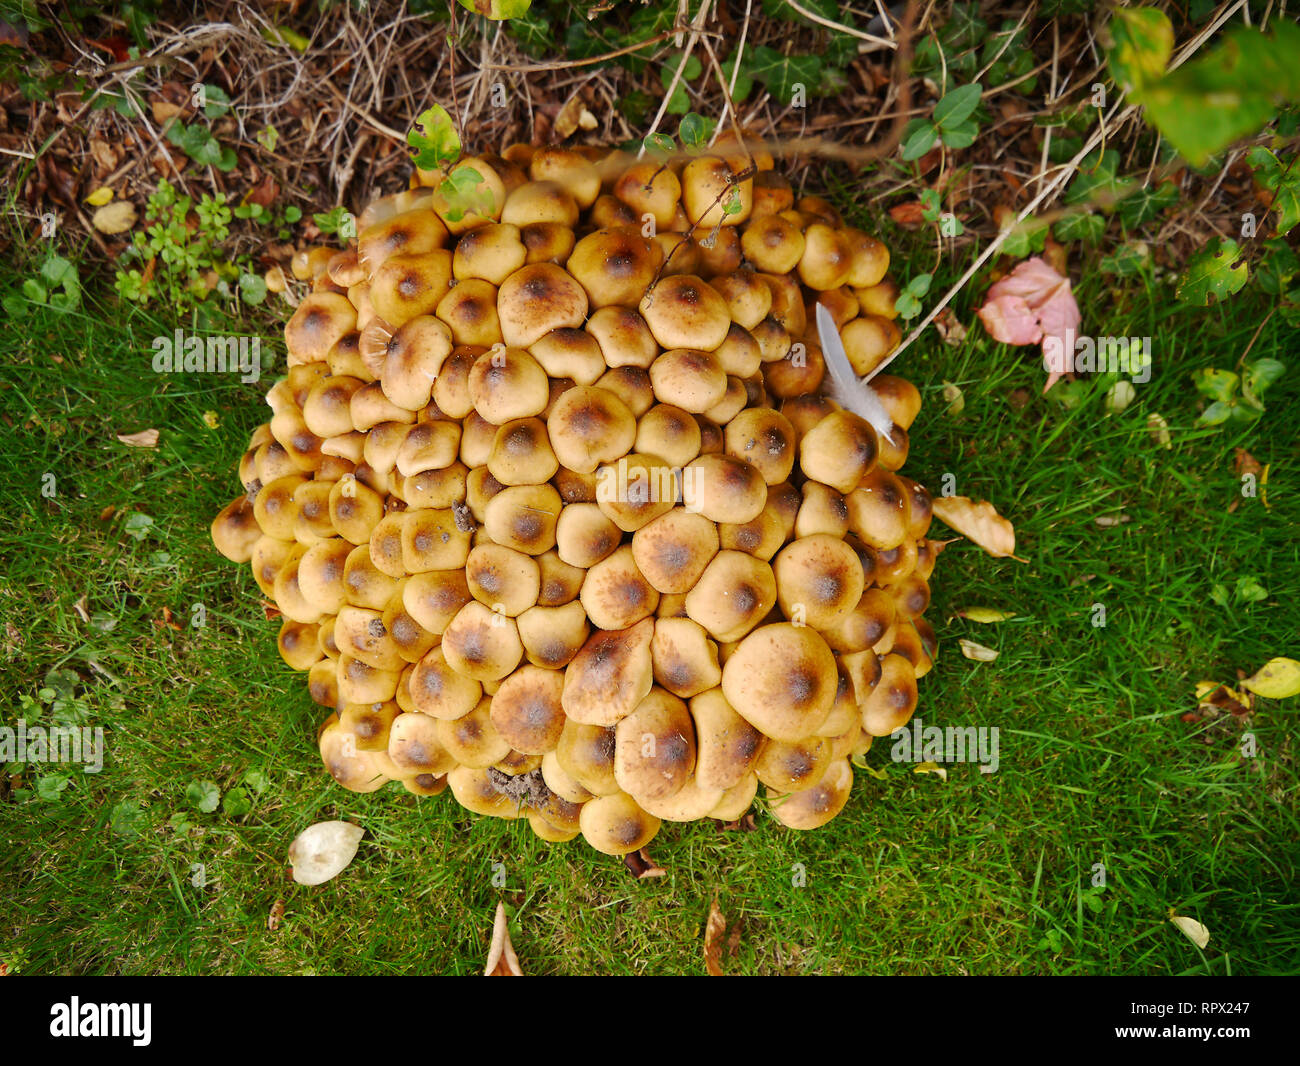 Fungus found in English garden. Stock Photo